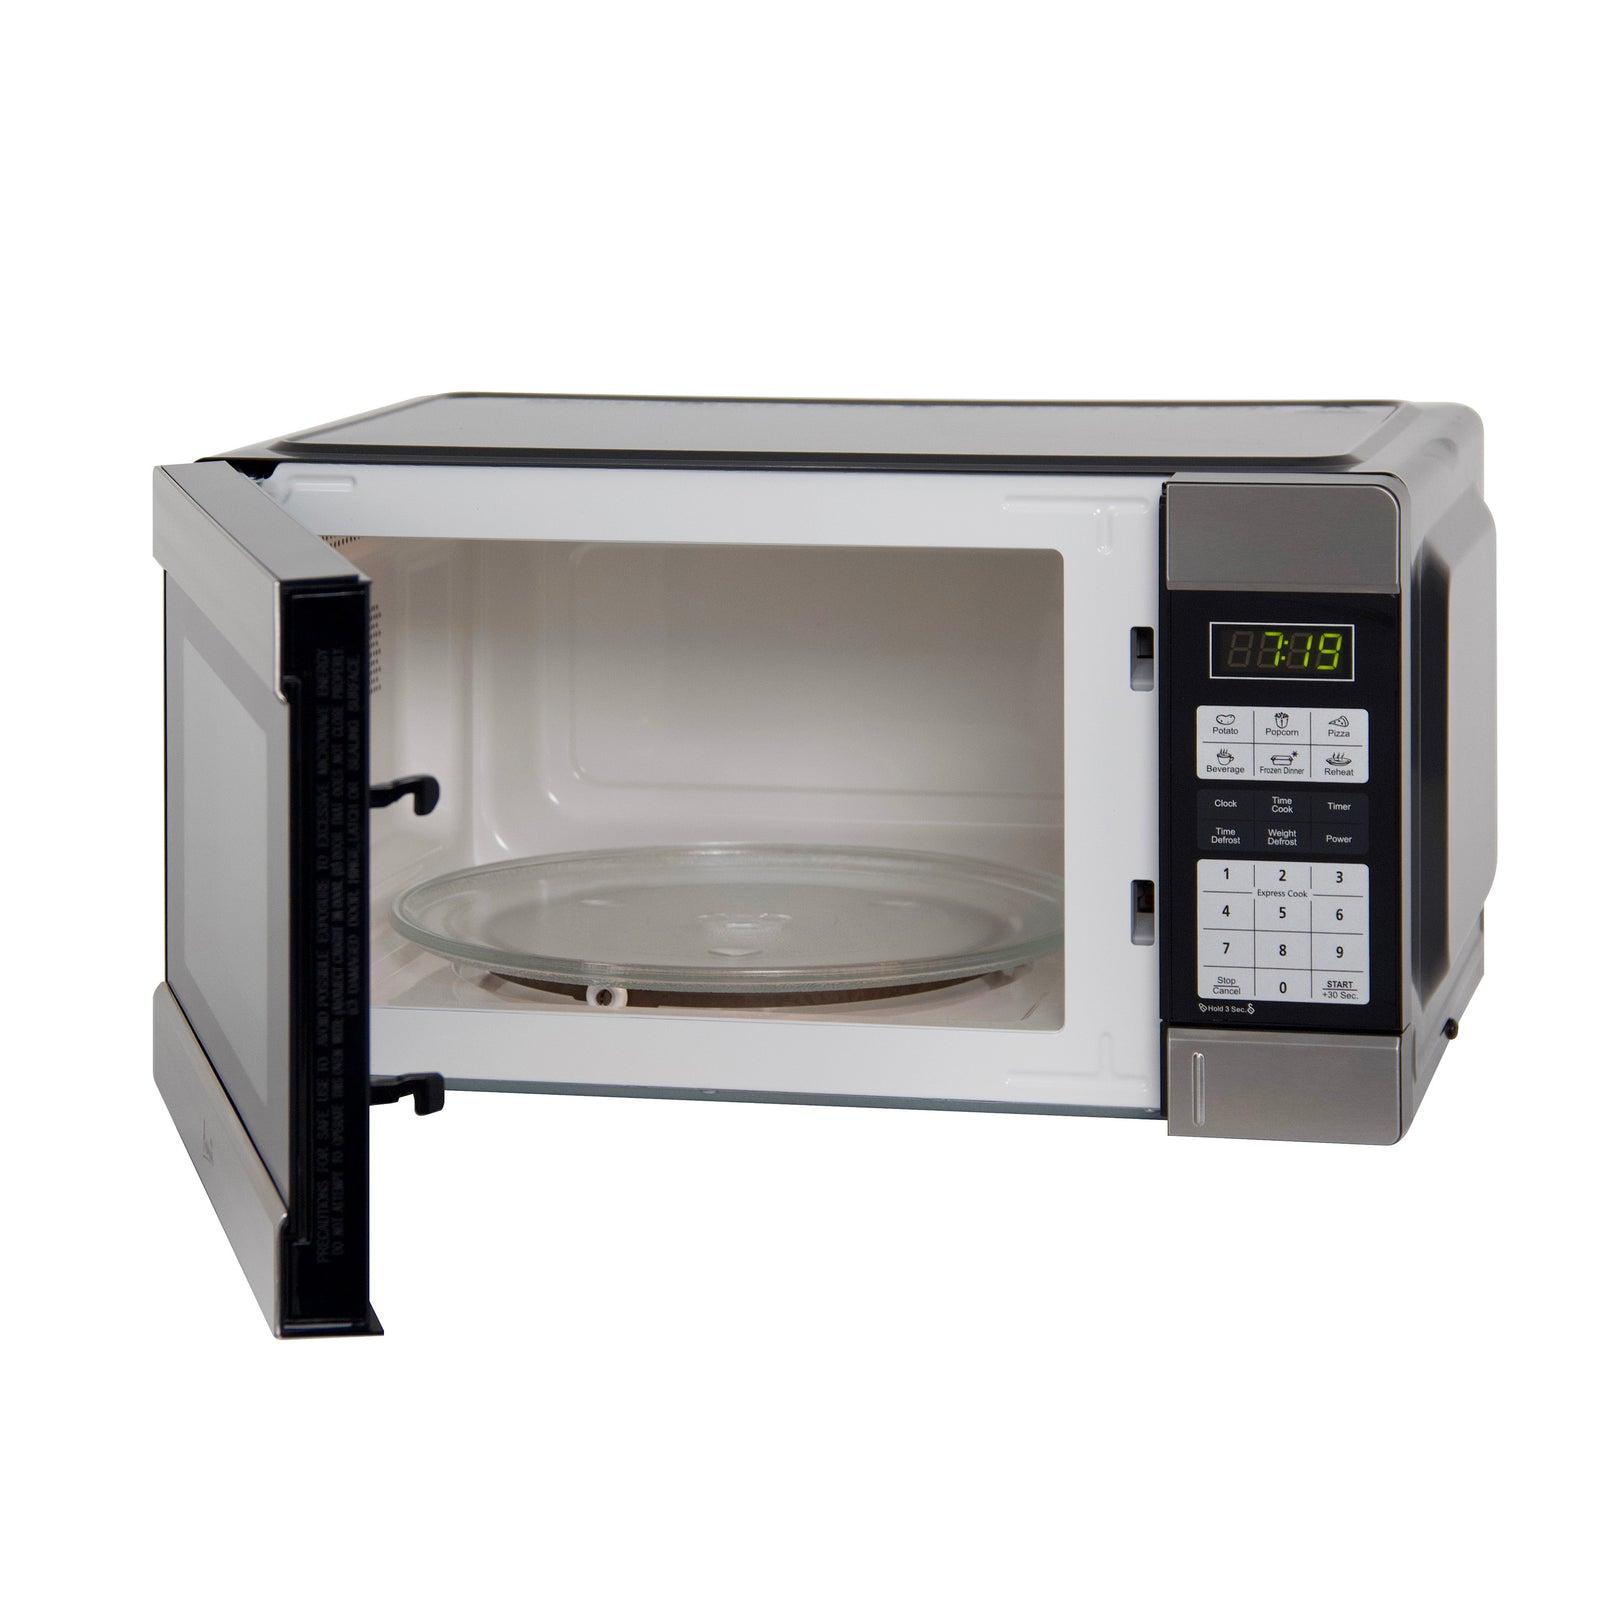 Avanti MT113K0W 1.1 Cu. Ft. Microwave Oven